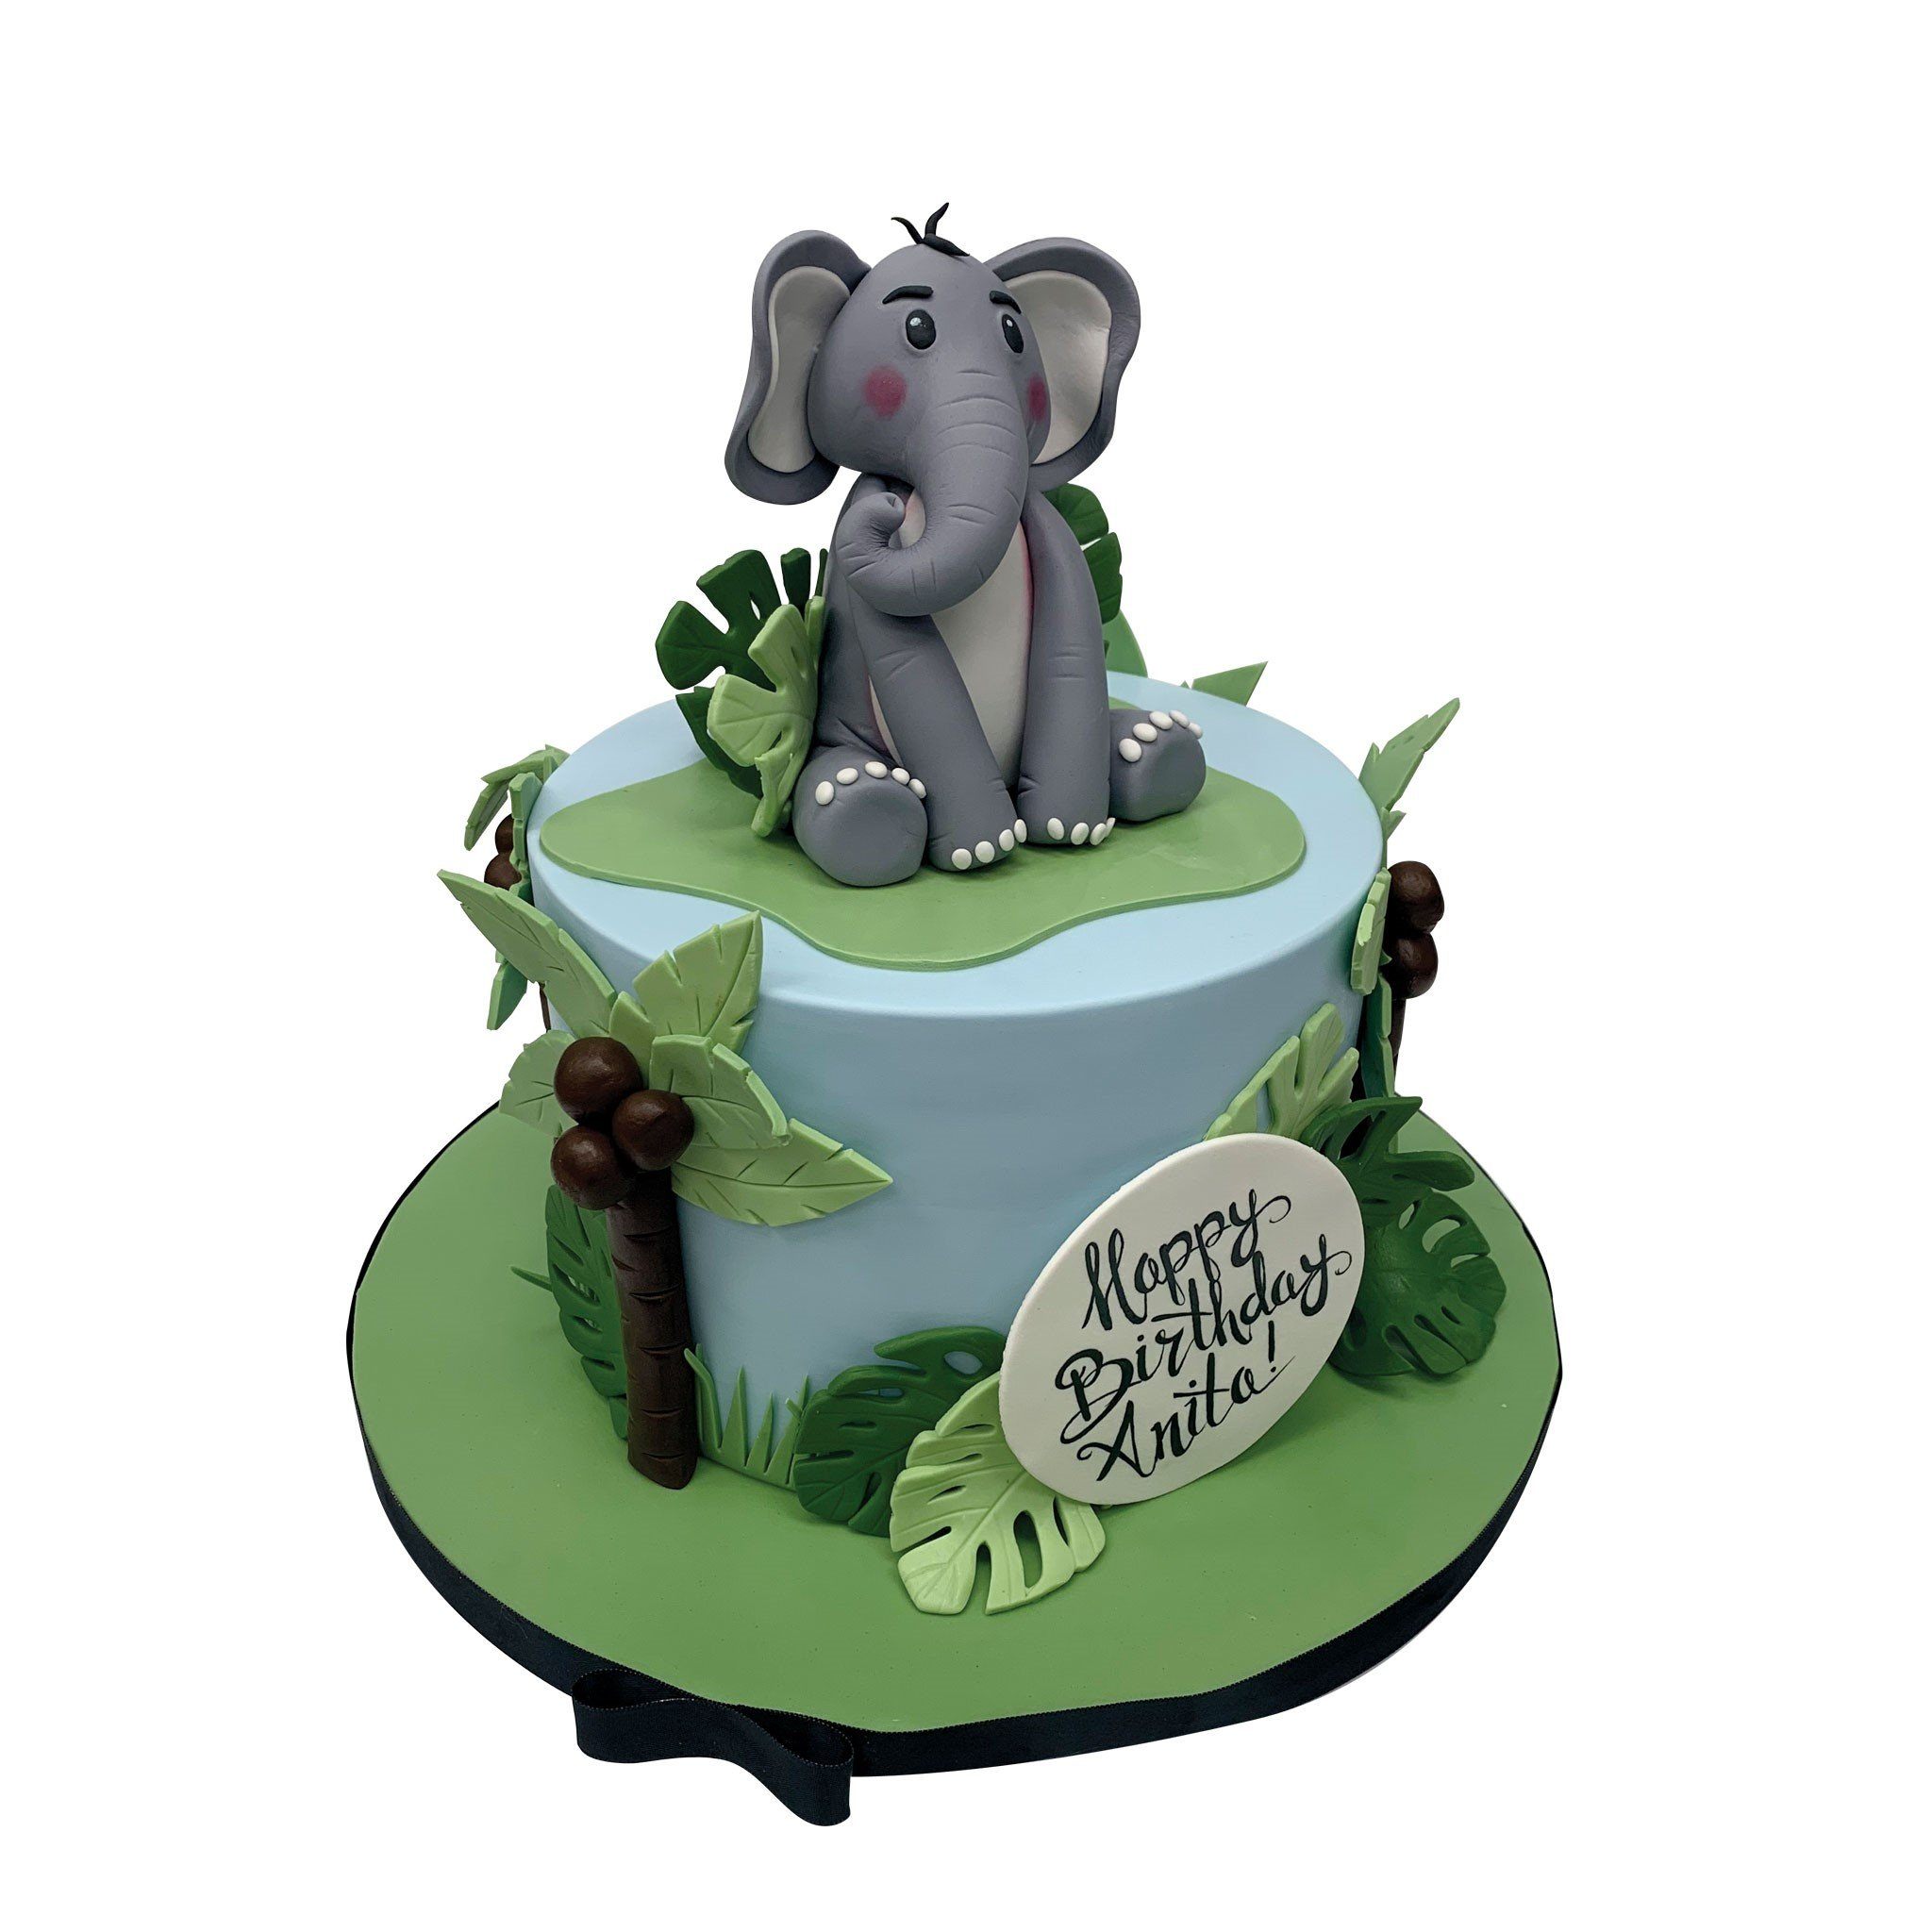 Little Elephant cake/First birthday cake – Runaway Cupcakes